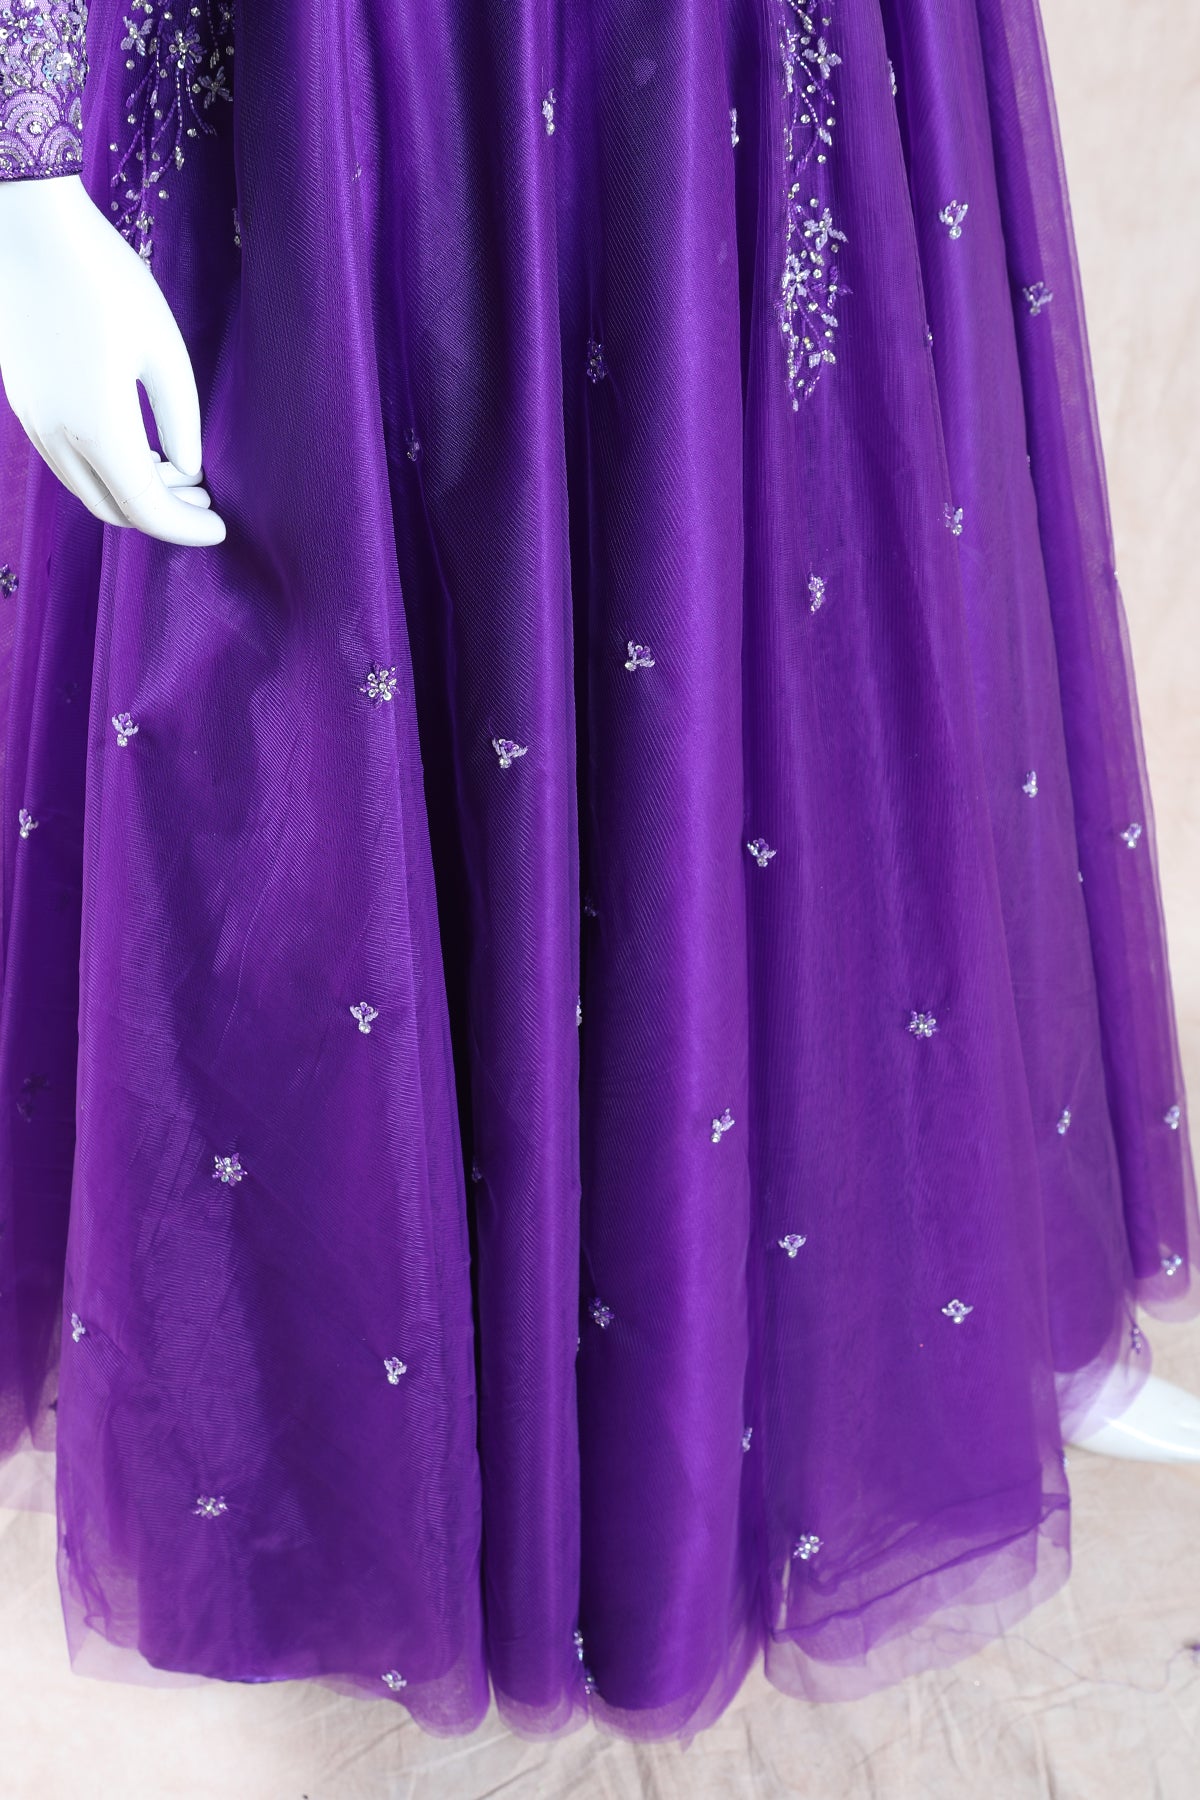 Violet Gown